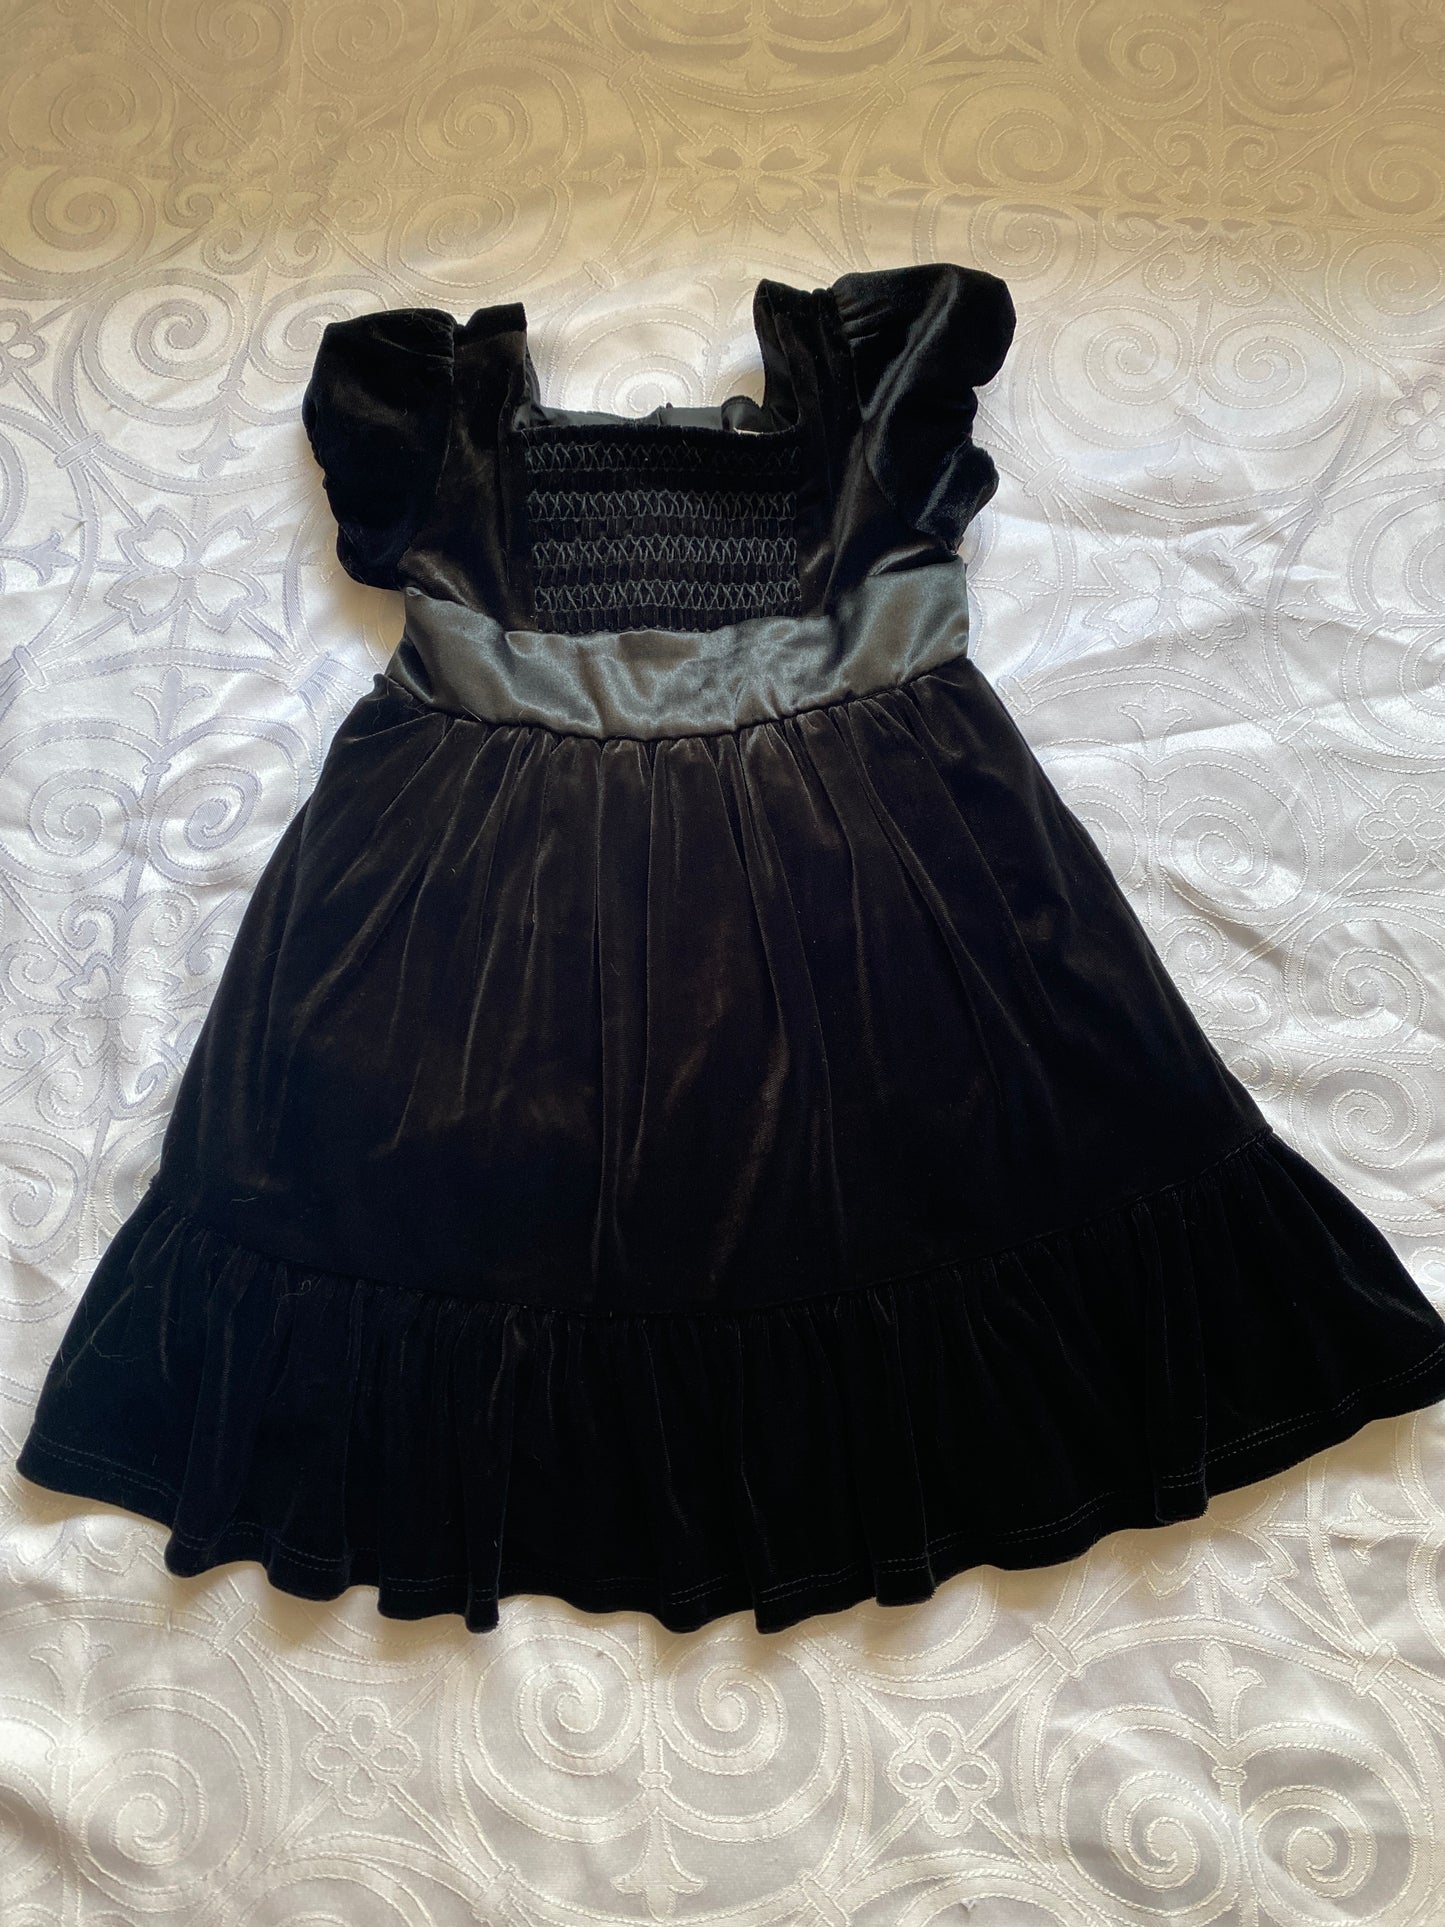 Girl 18-24month Old Navy black dress